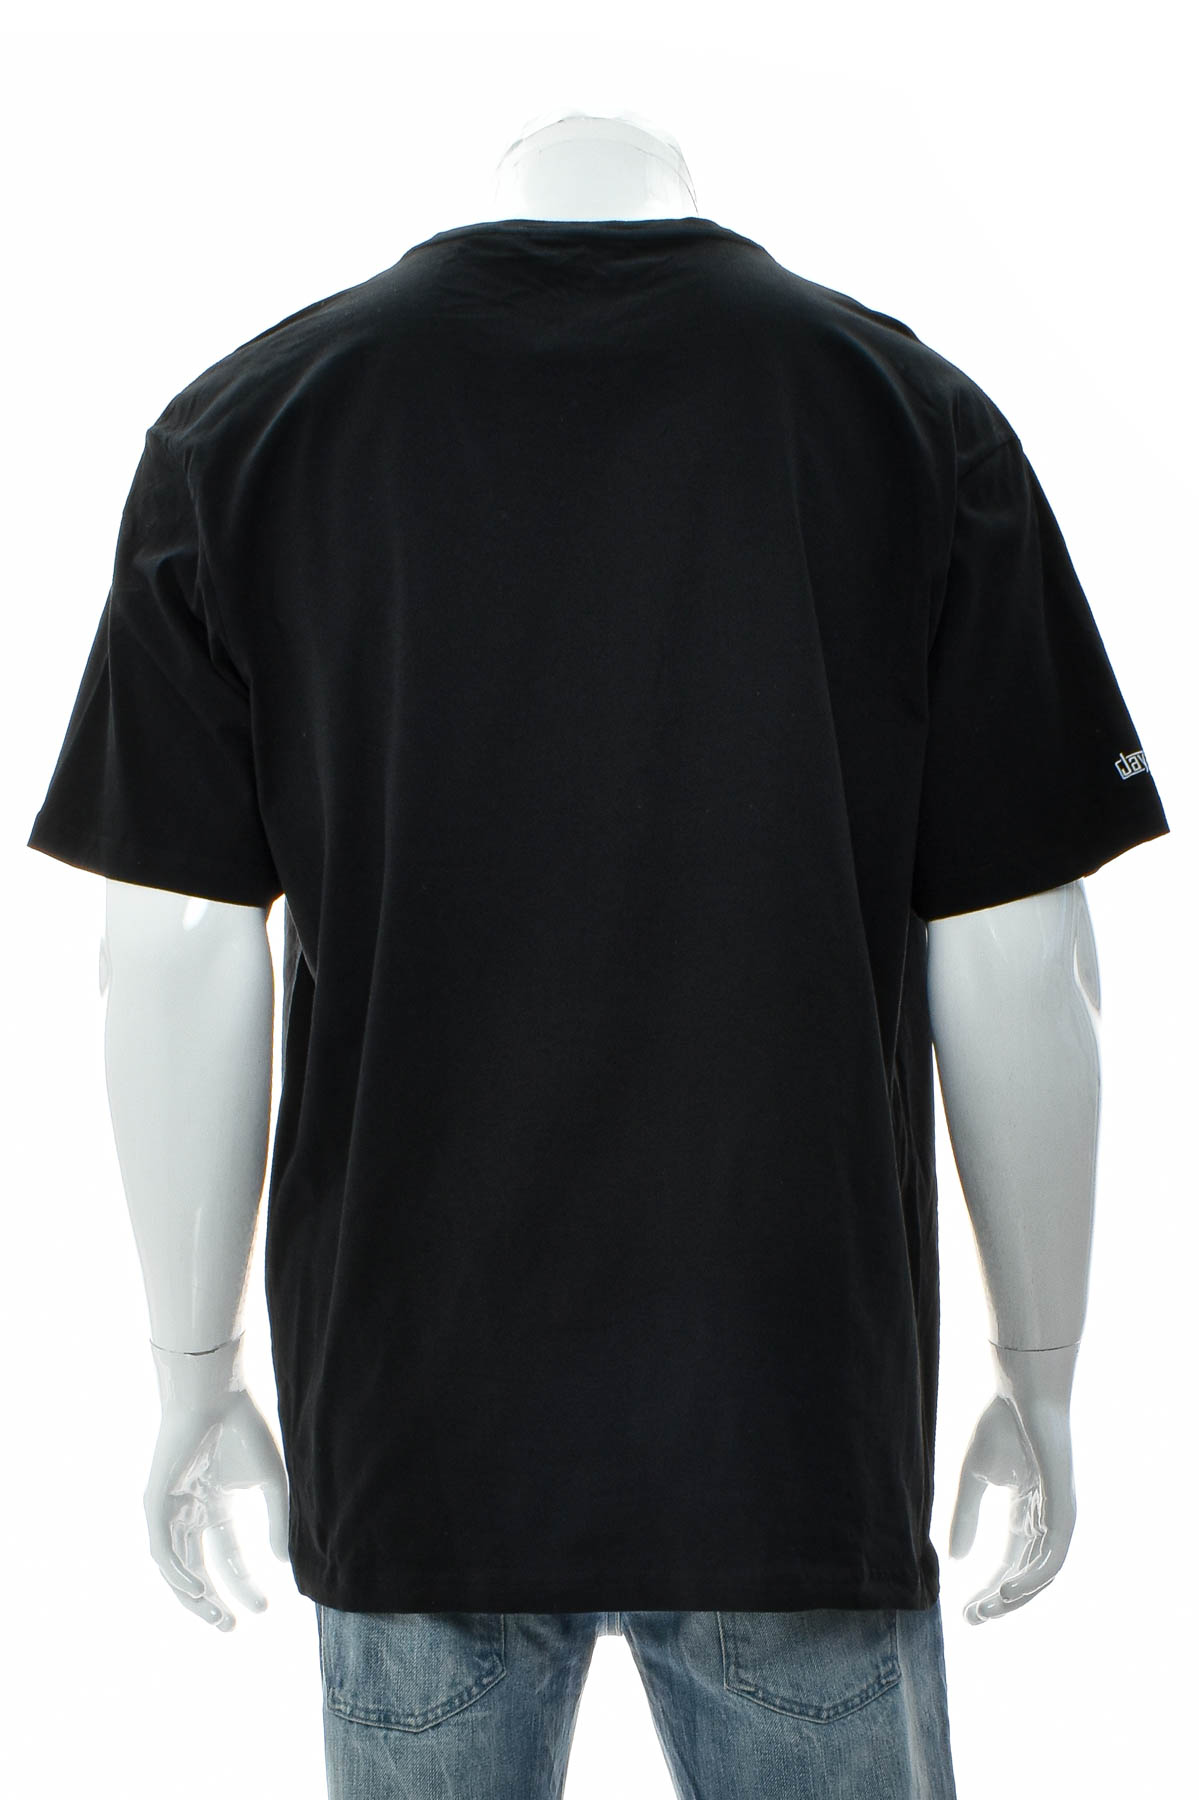 Men's T-shirt - SONAR Clothing - 1